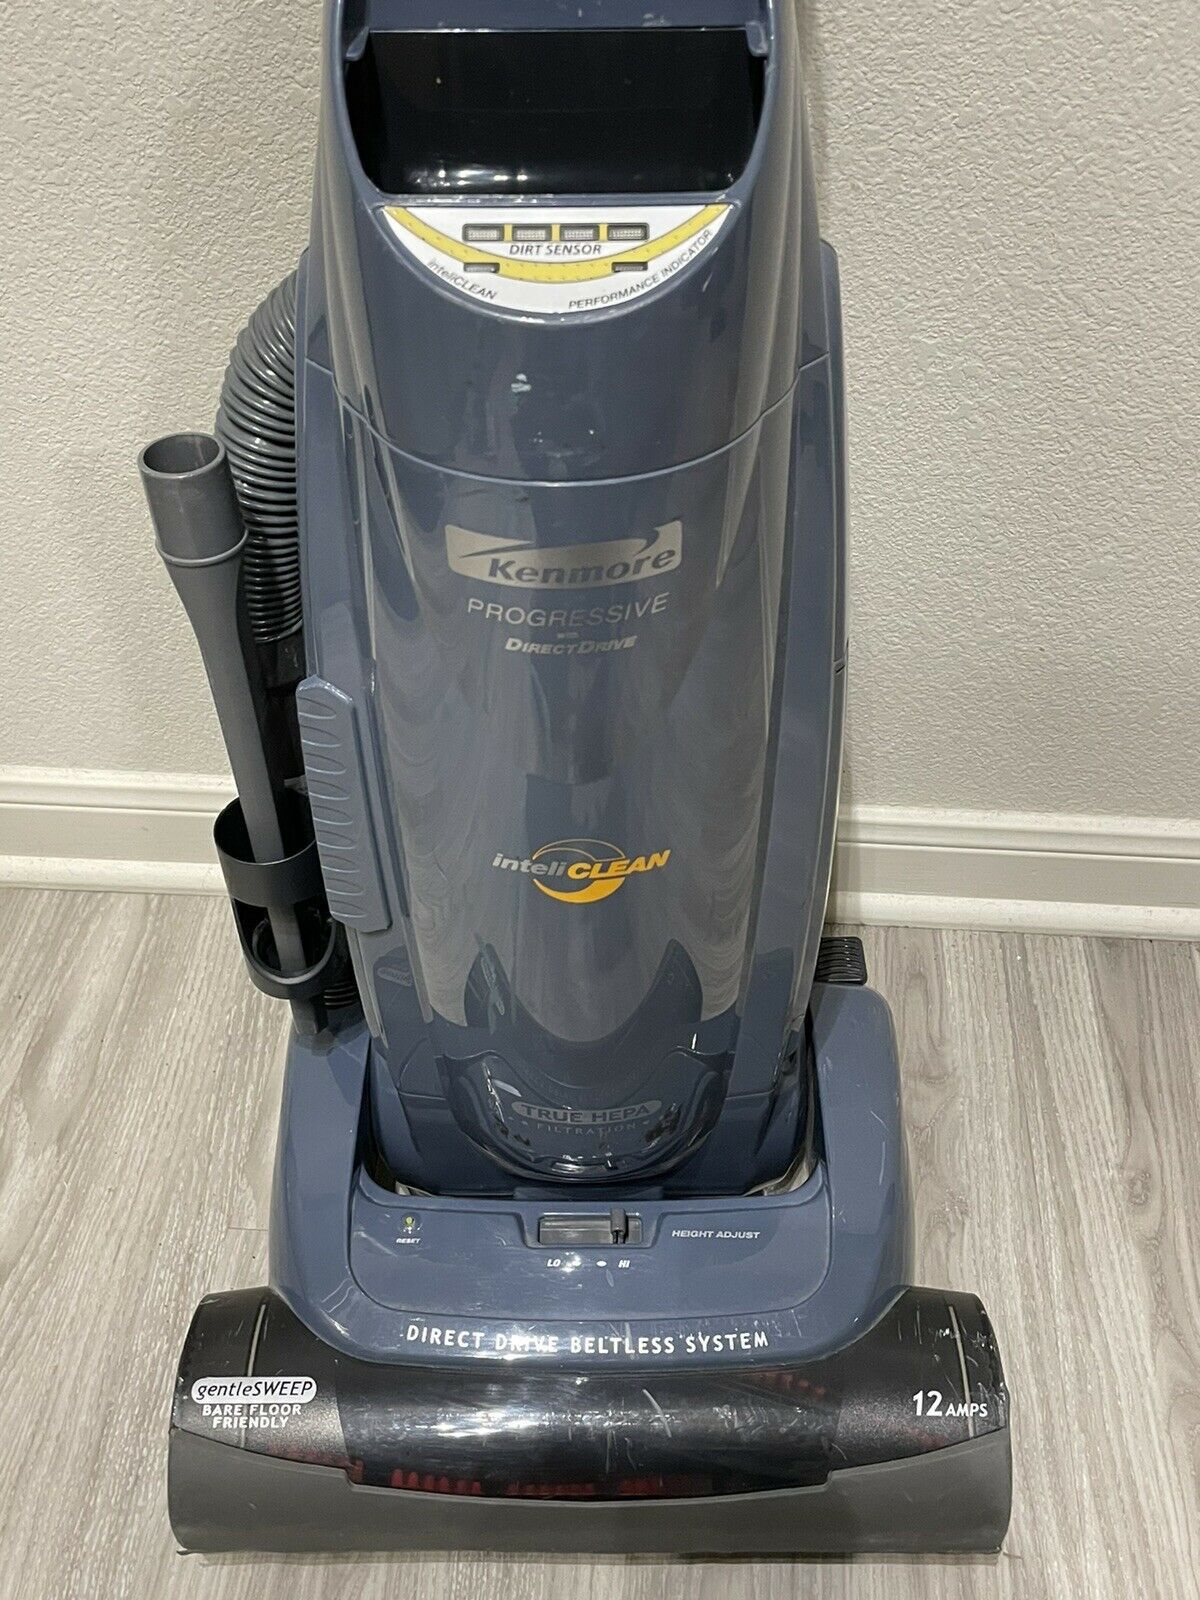 Kenmore Progressive Hepa Upright Vacuum Cleaner direct drive inteli clean 35922